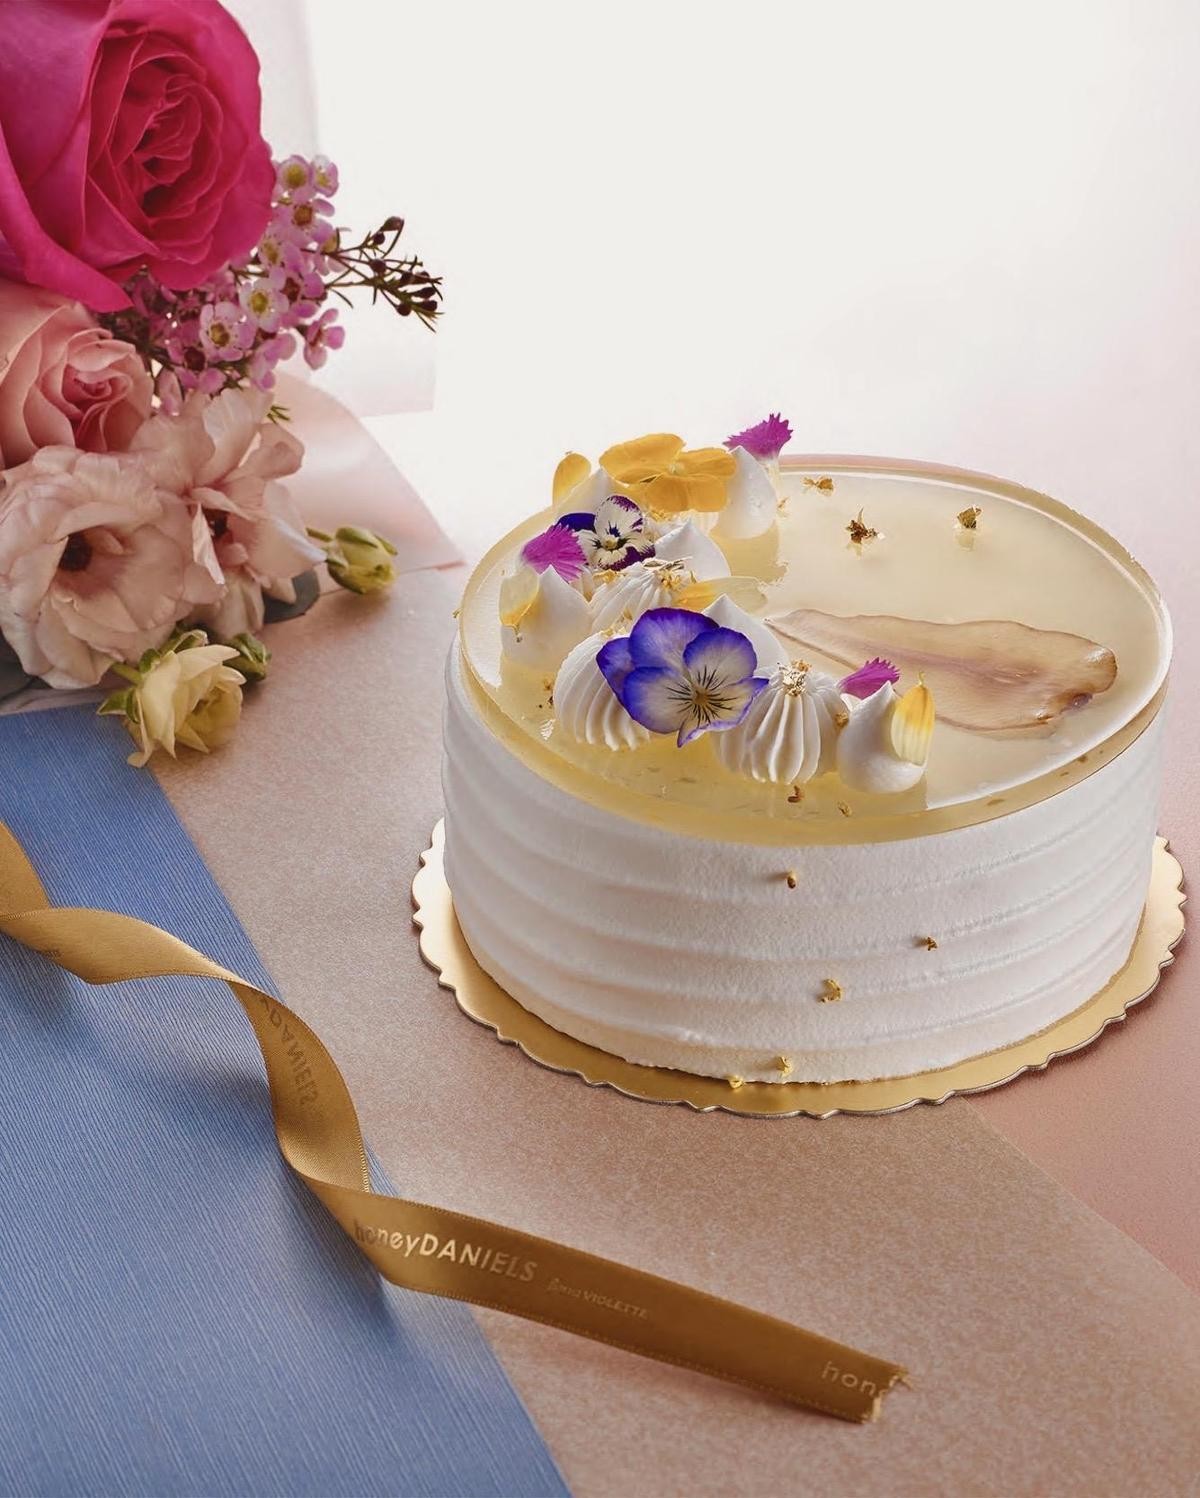 「Heritage」推出限量50組的「母親節限定蛋糕花禮盒」，包含茶香、果香交融的桂花烏龍洋梨蛋糕與訂製花束。（禮盒4,100元／組、單買蛋糕1,180元／6吋，Heritage提供）